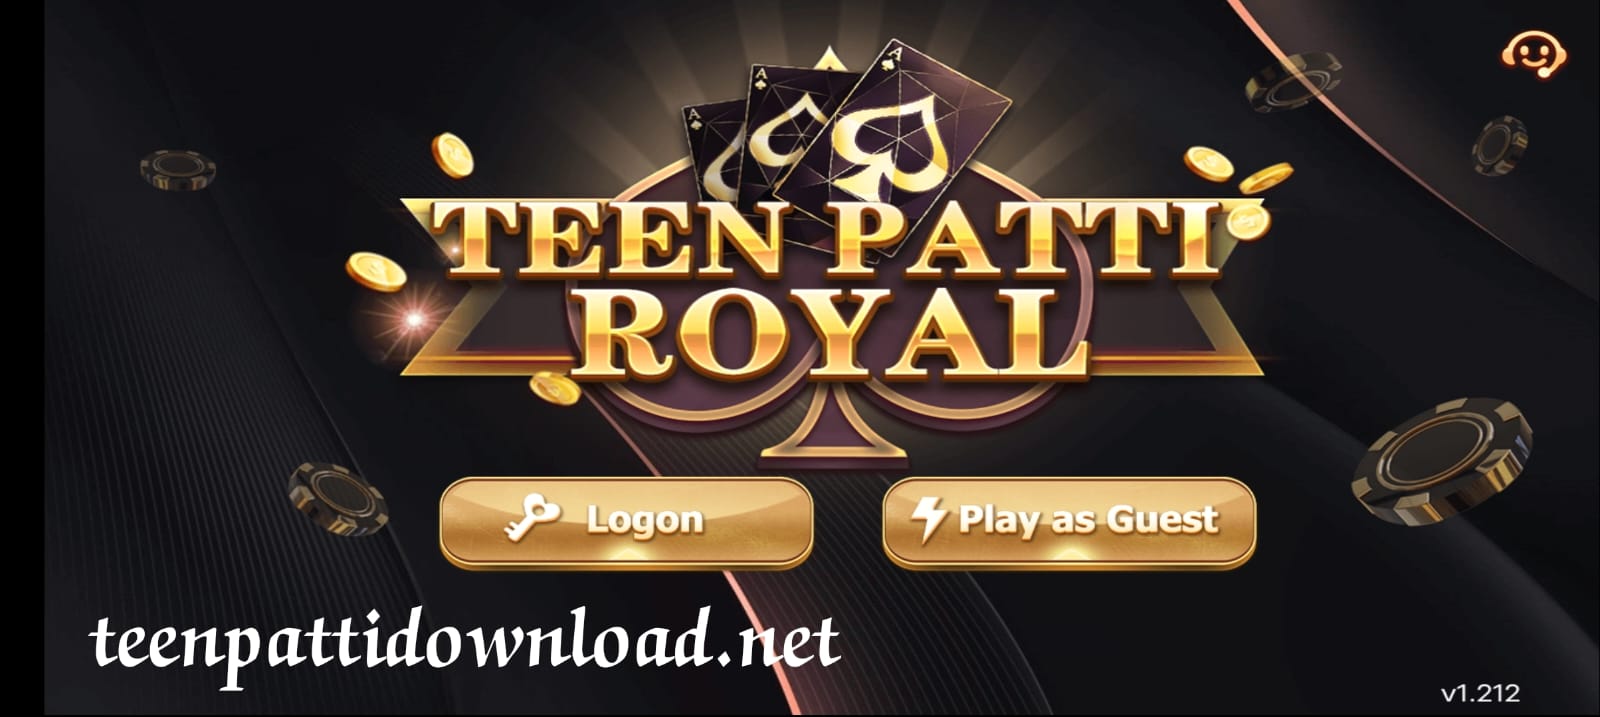 Create An Account In Teen Patti Royal Application